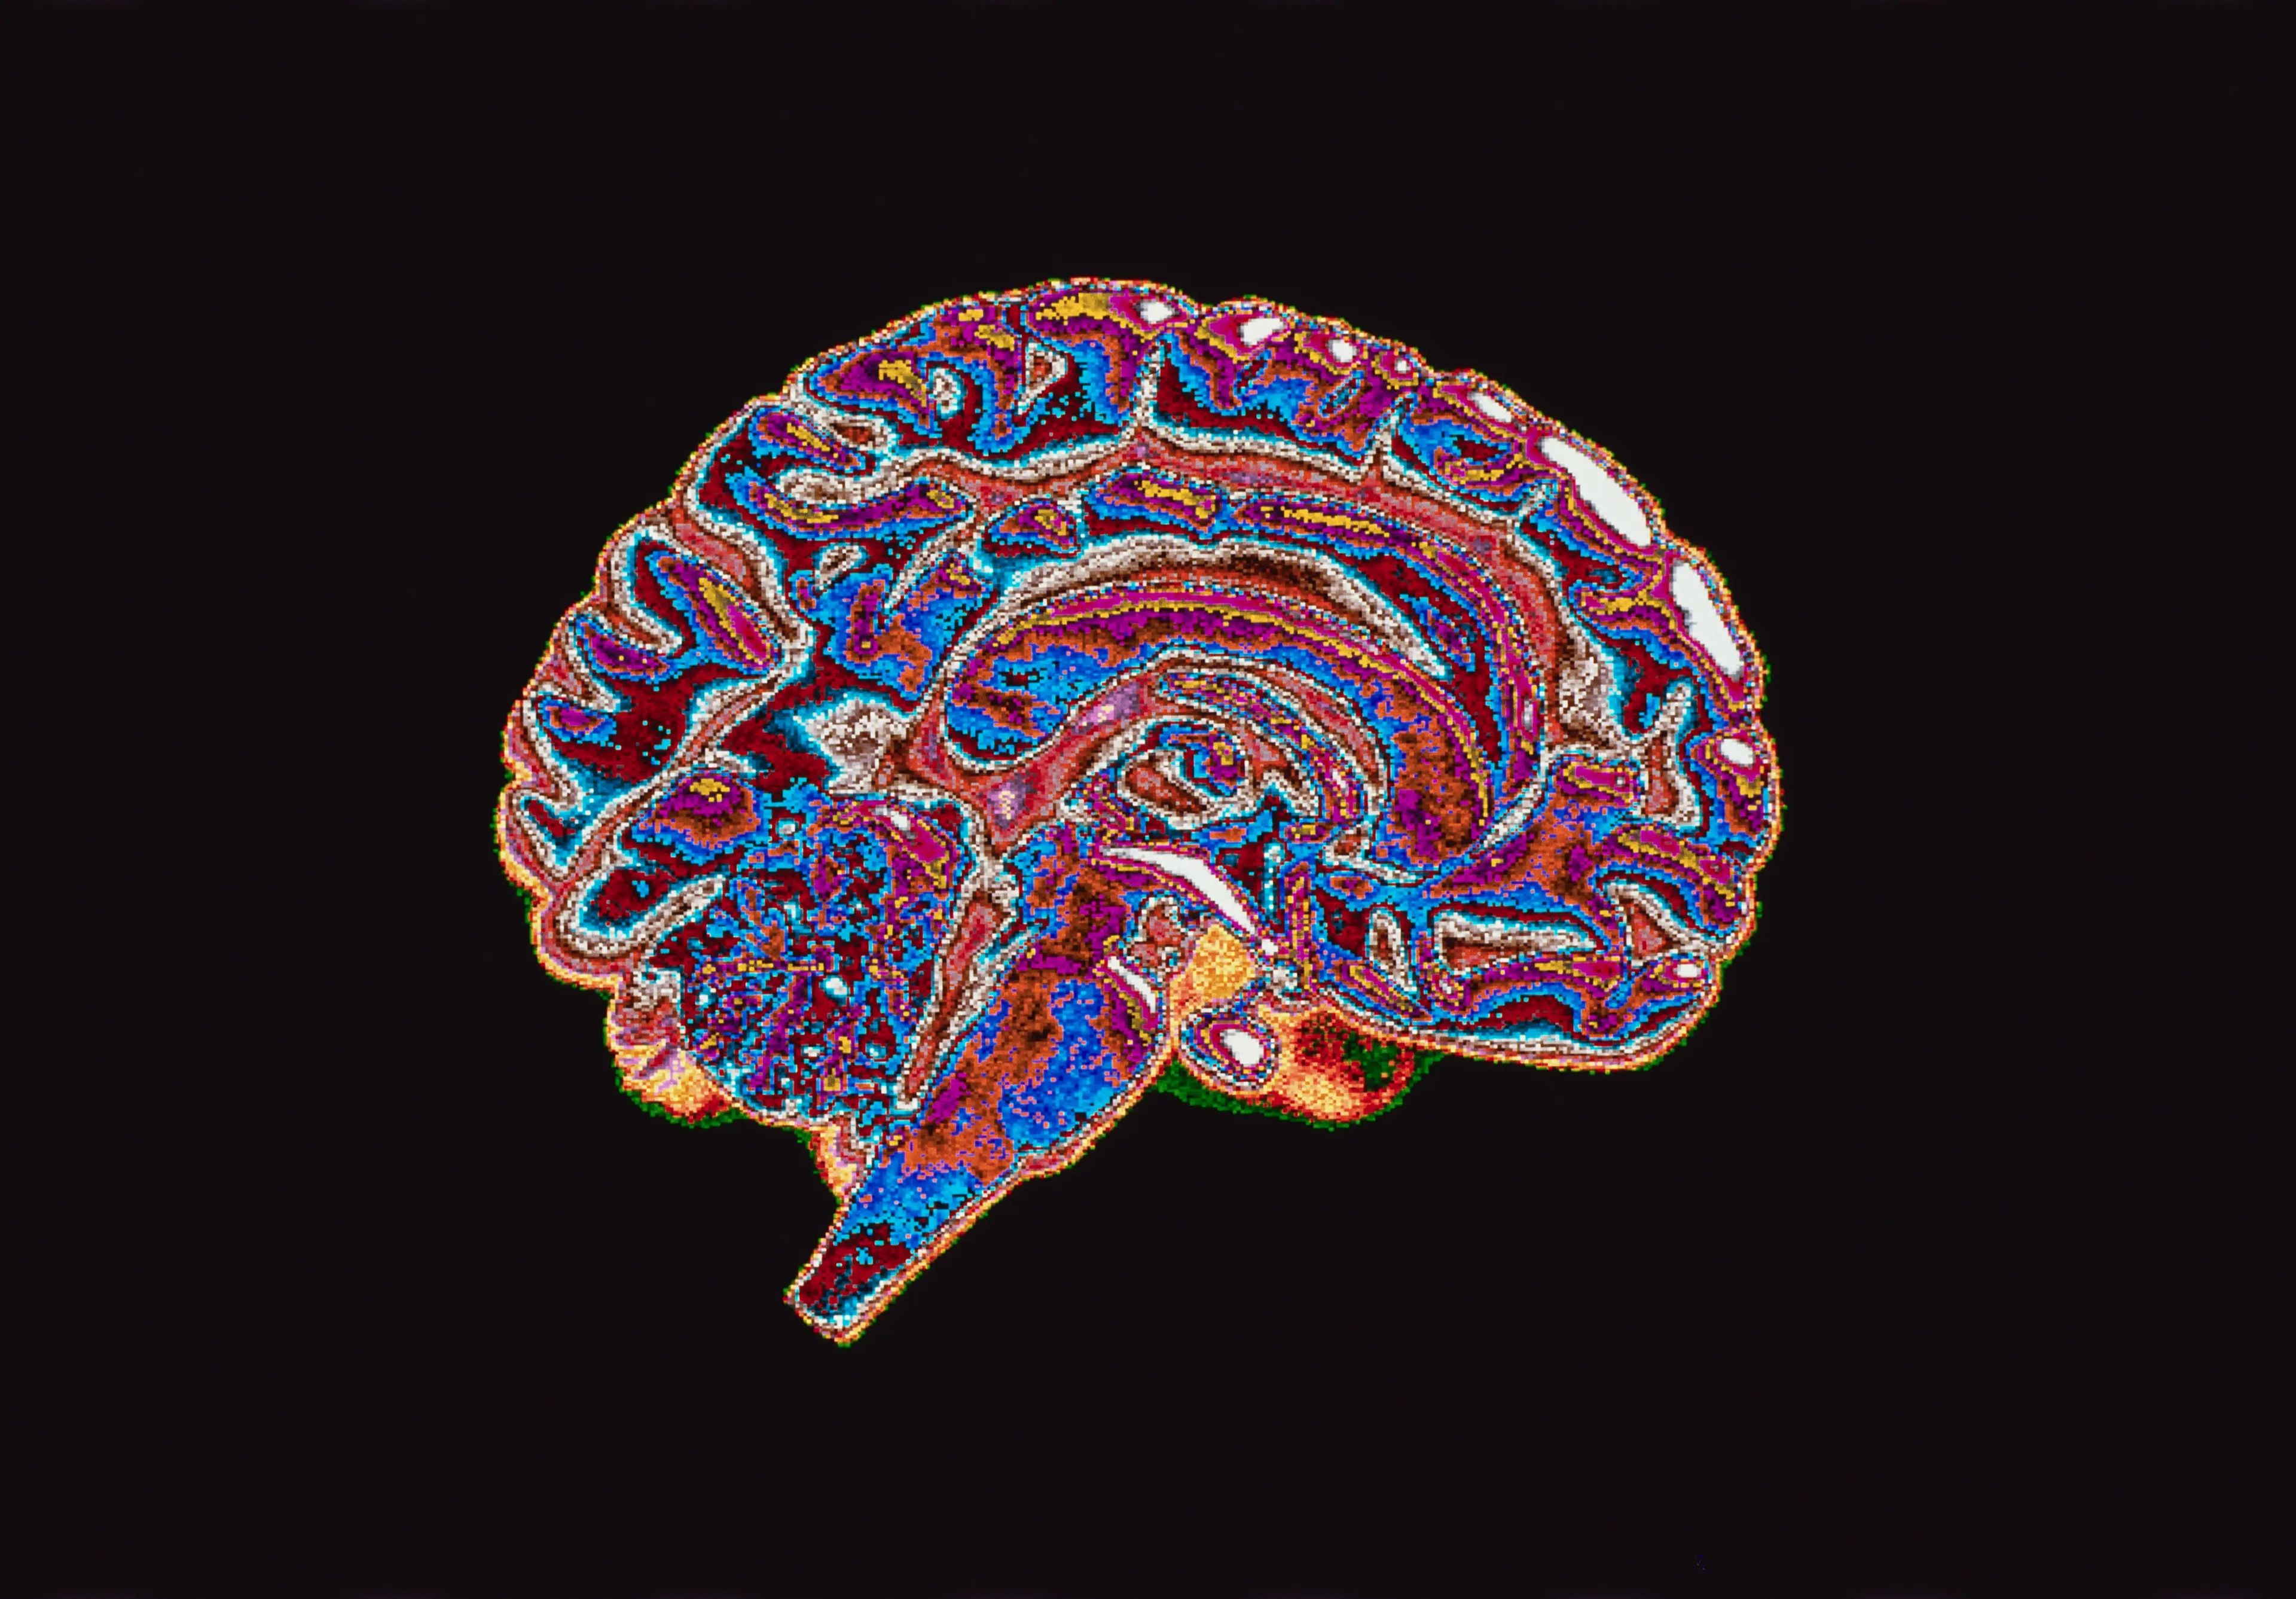 Digital art of colorful brain scan